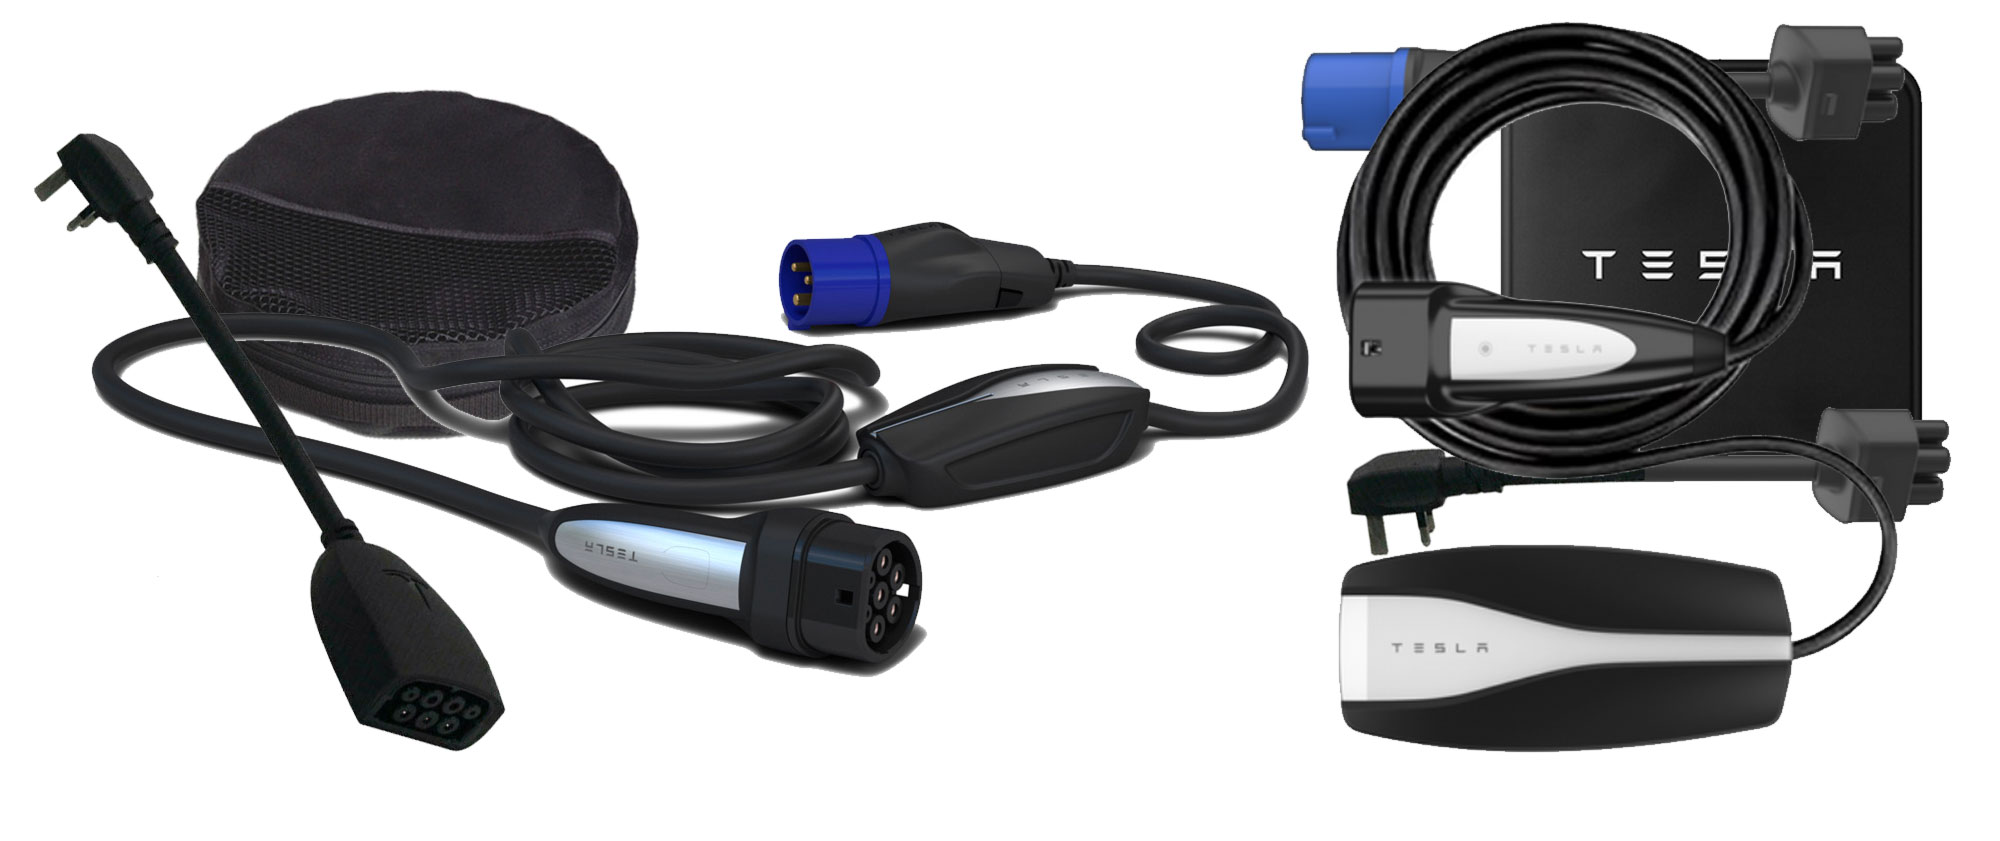 Details about   Tesla Charger BAG for Gen 1 or 2 UMC Universal Mobile Charging Cable Plug OEM